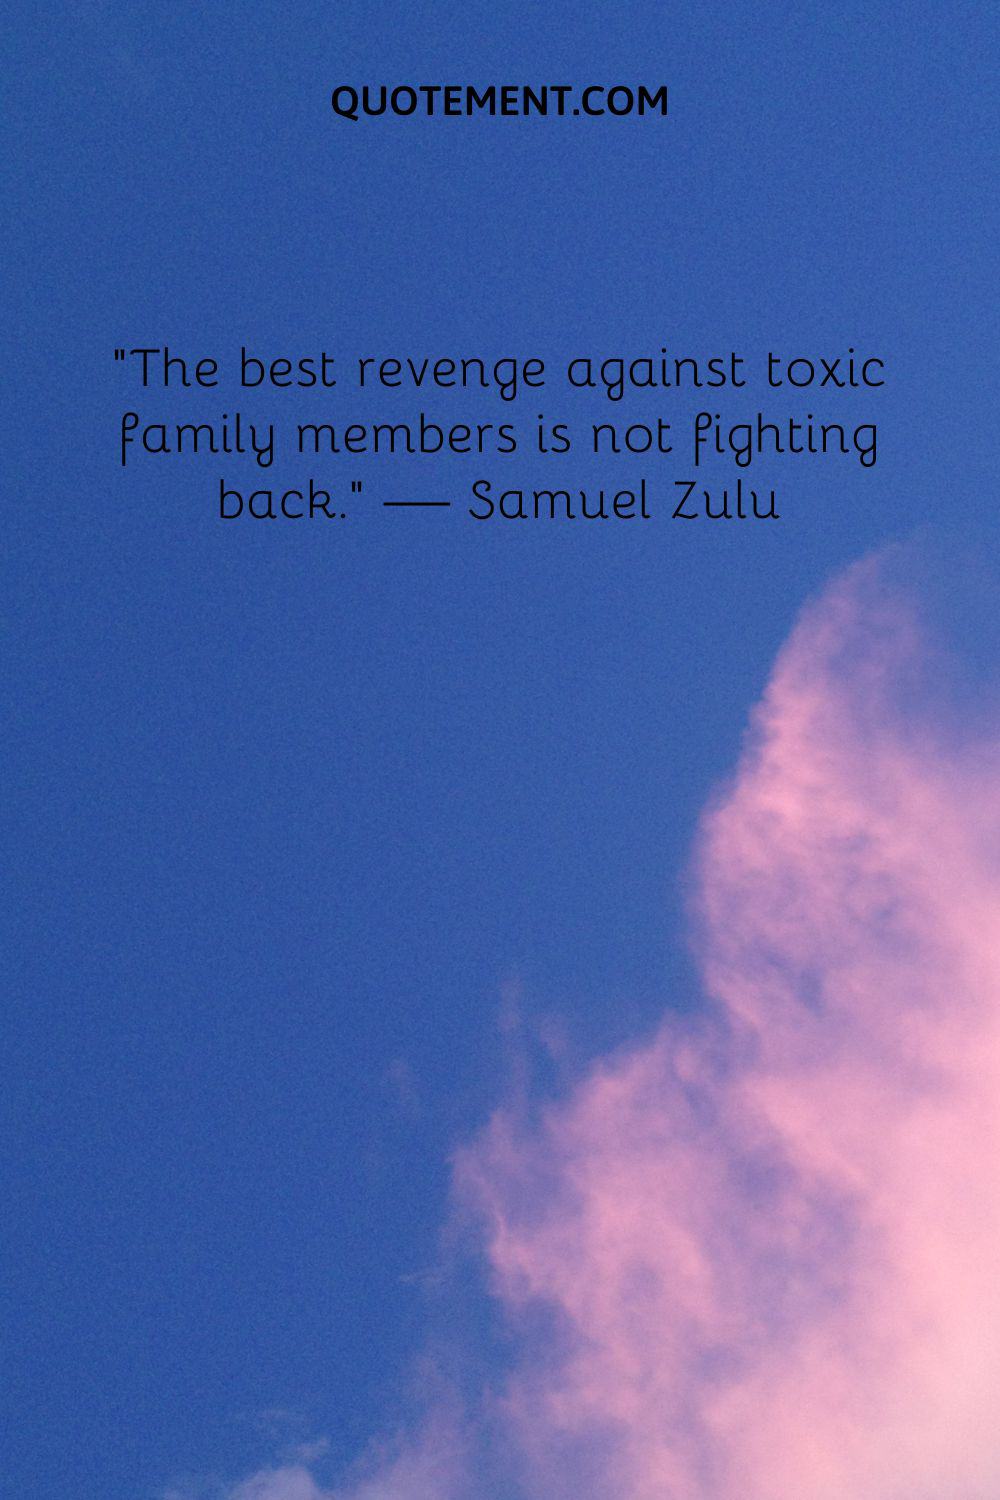 The best revenge against toxic family members is not fighting back